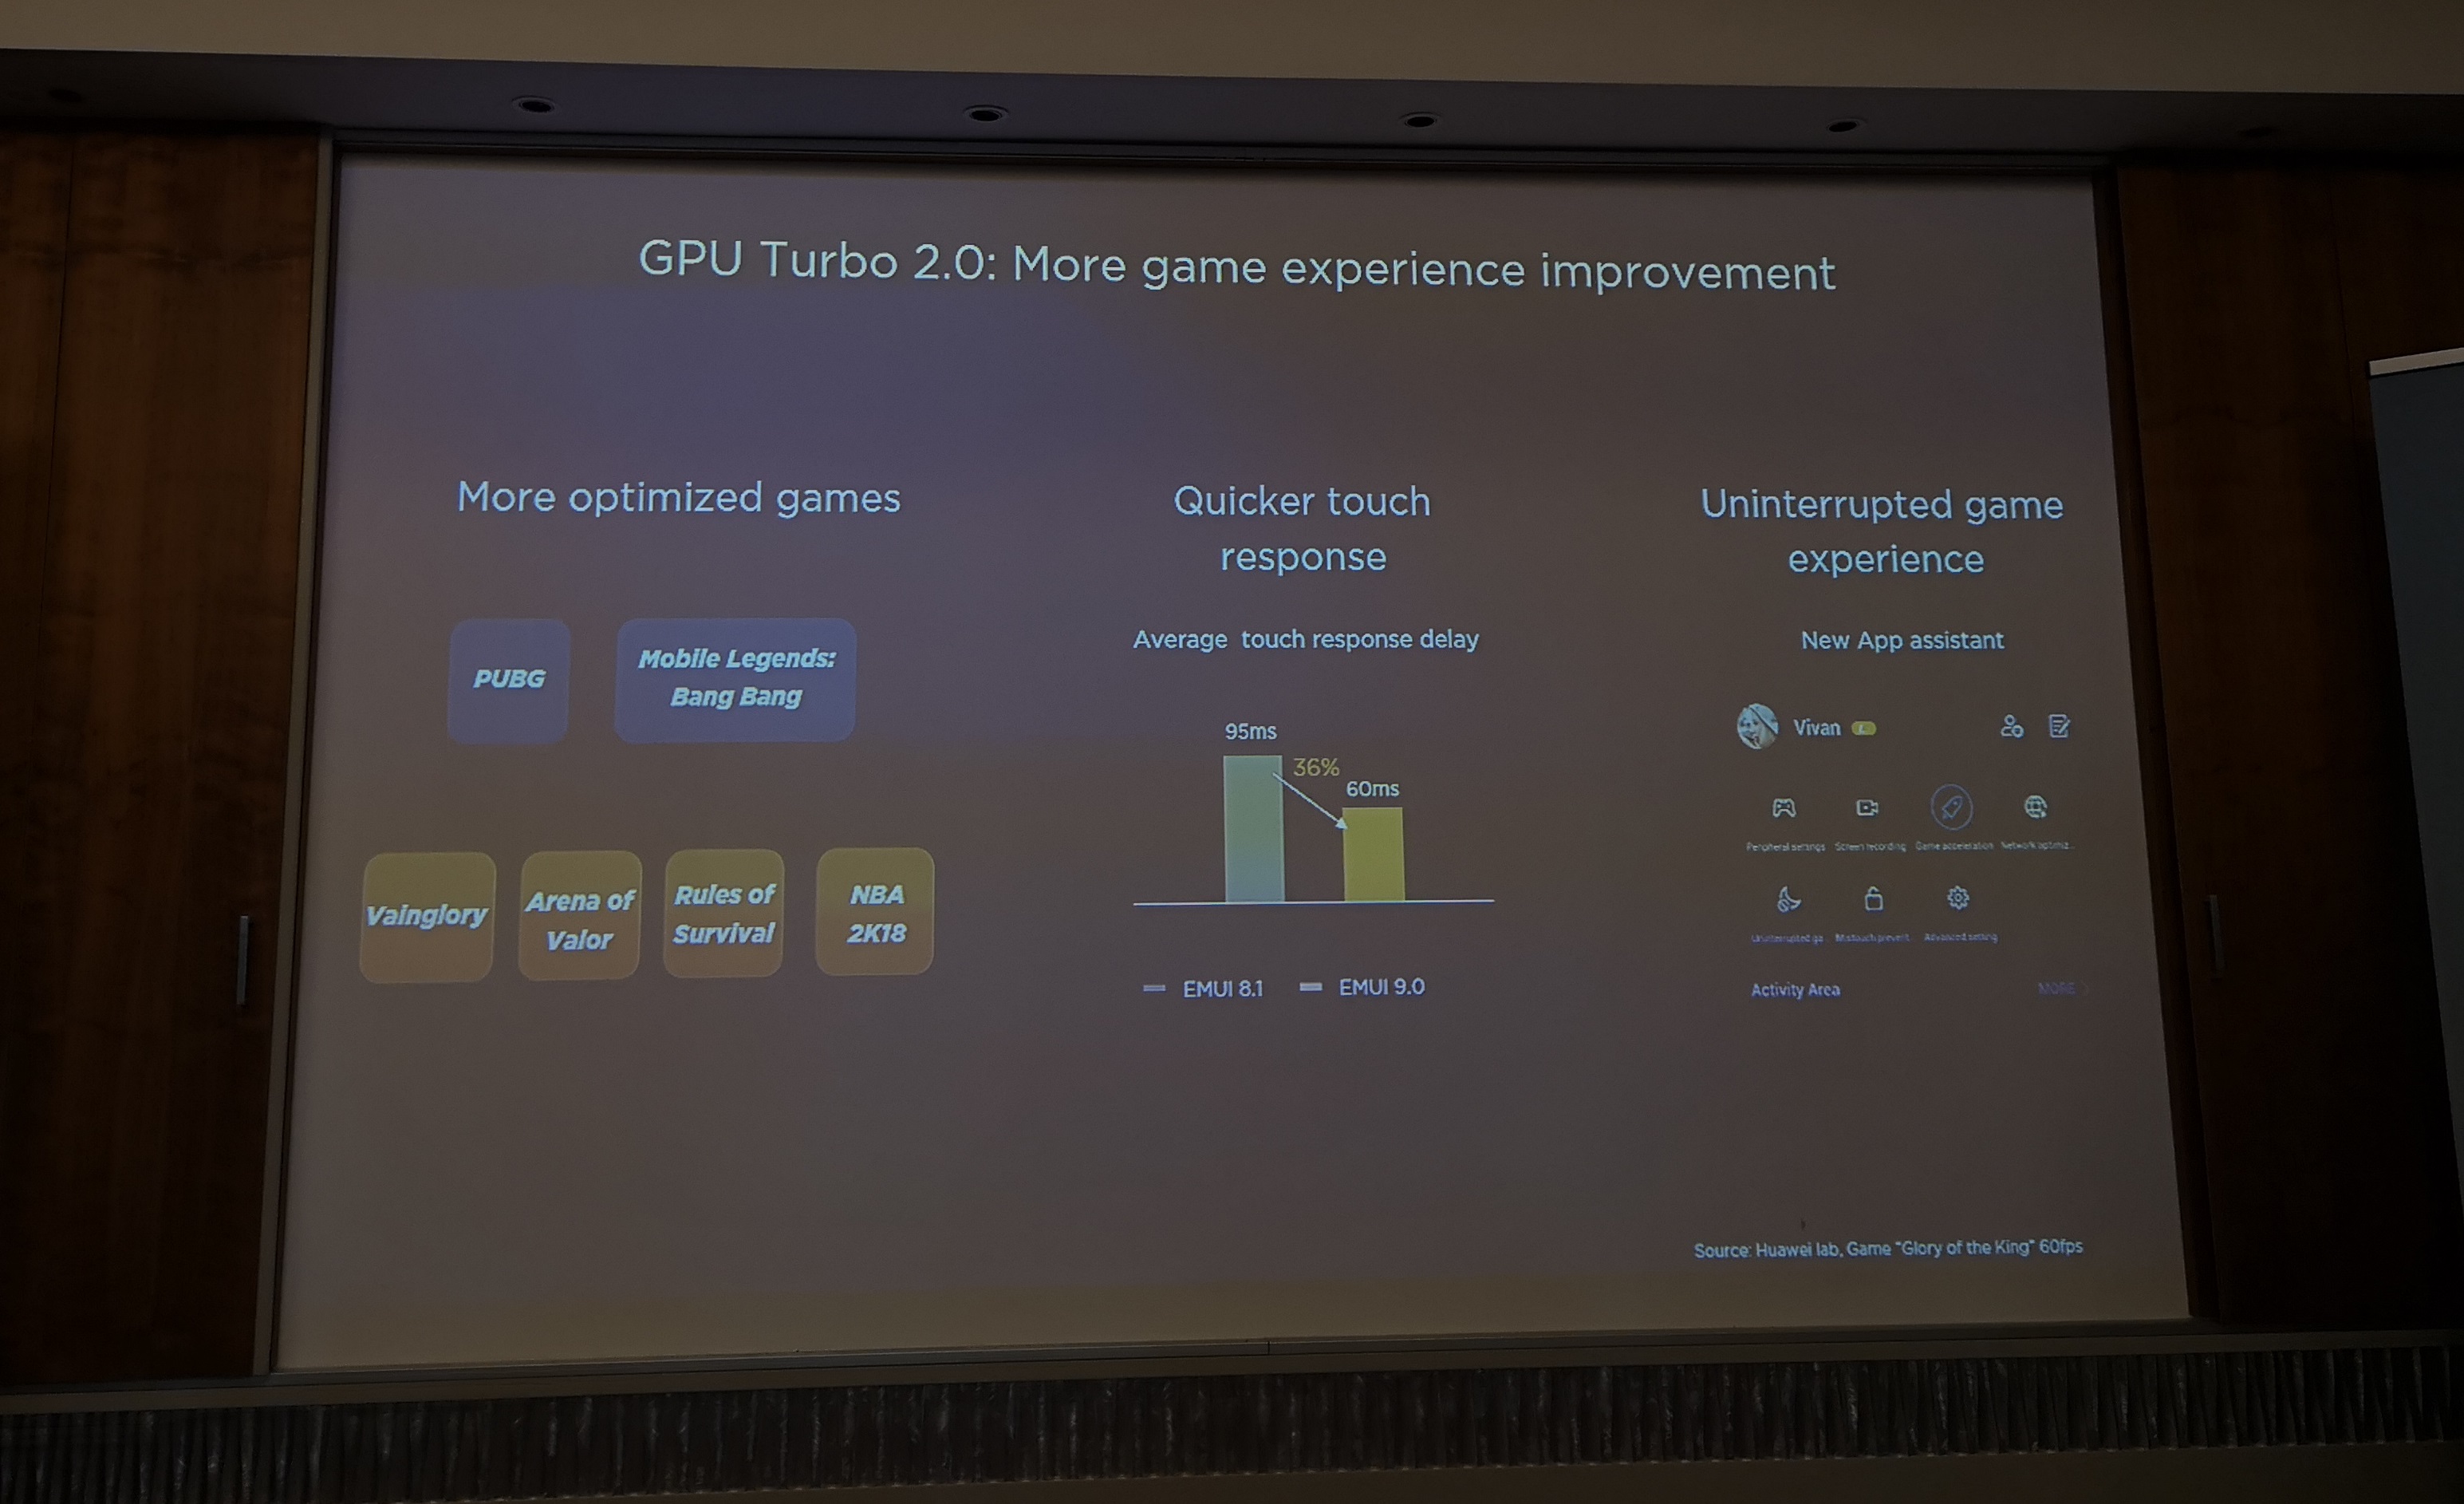 Huawei GPU Turbo 2.0 details from a slide. 